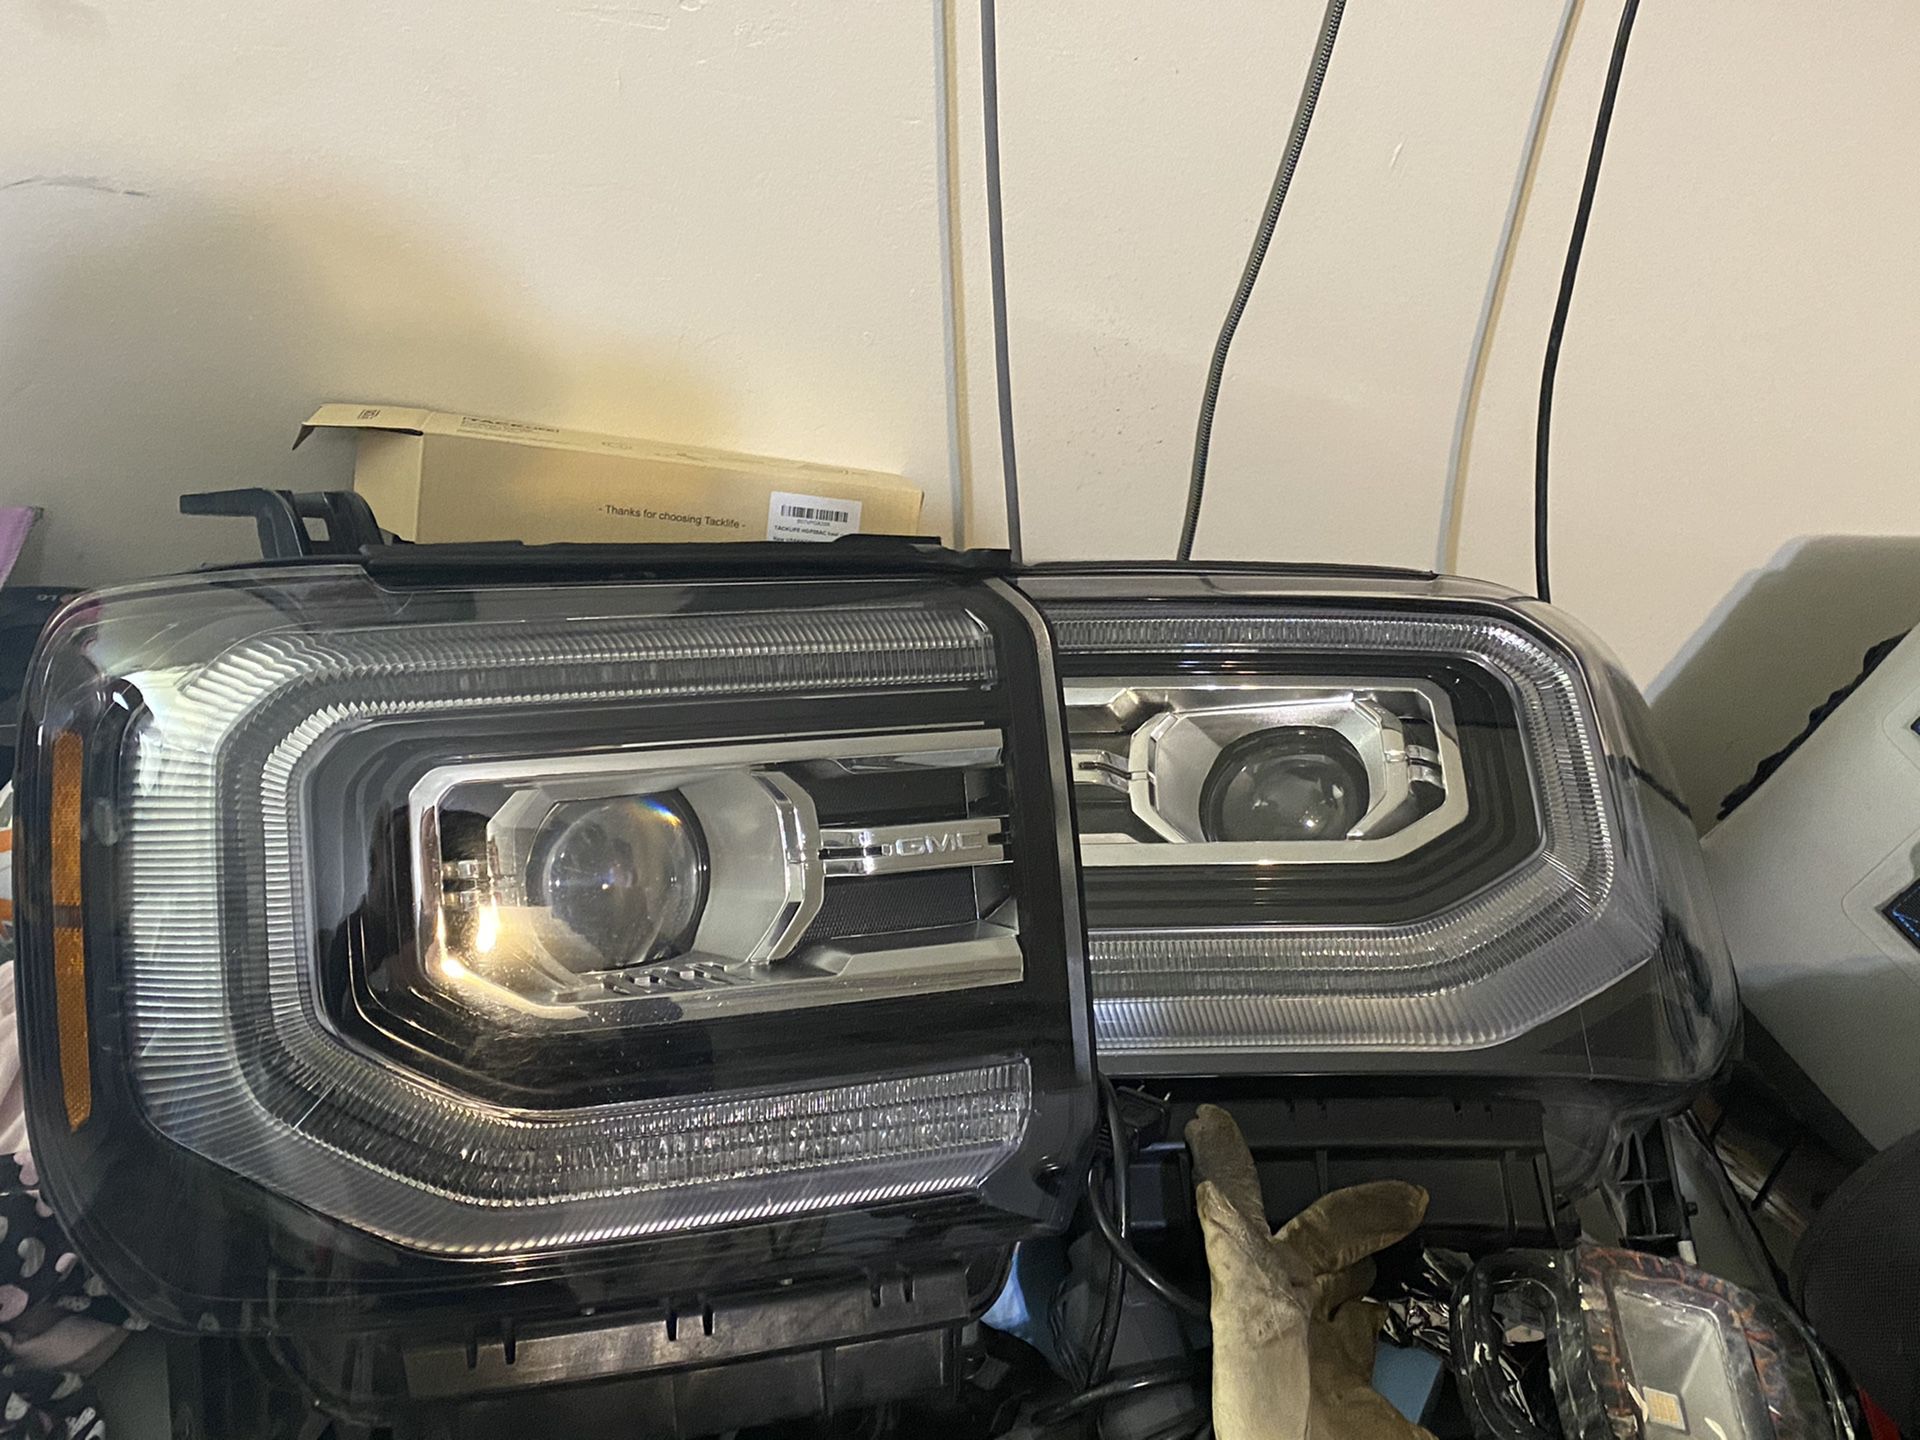 2017 GMC Sierra Denali headlights